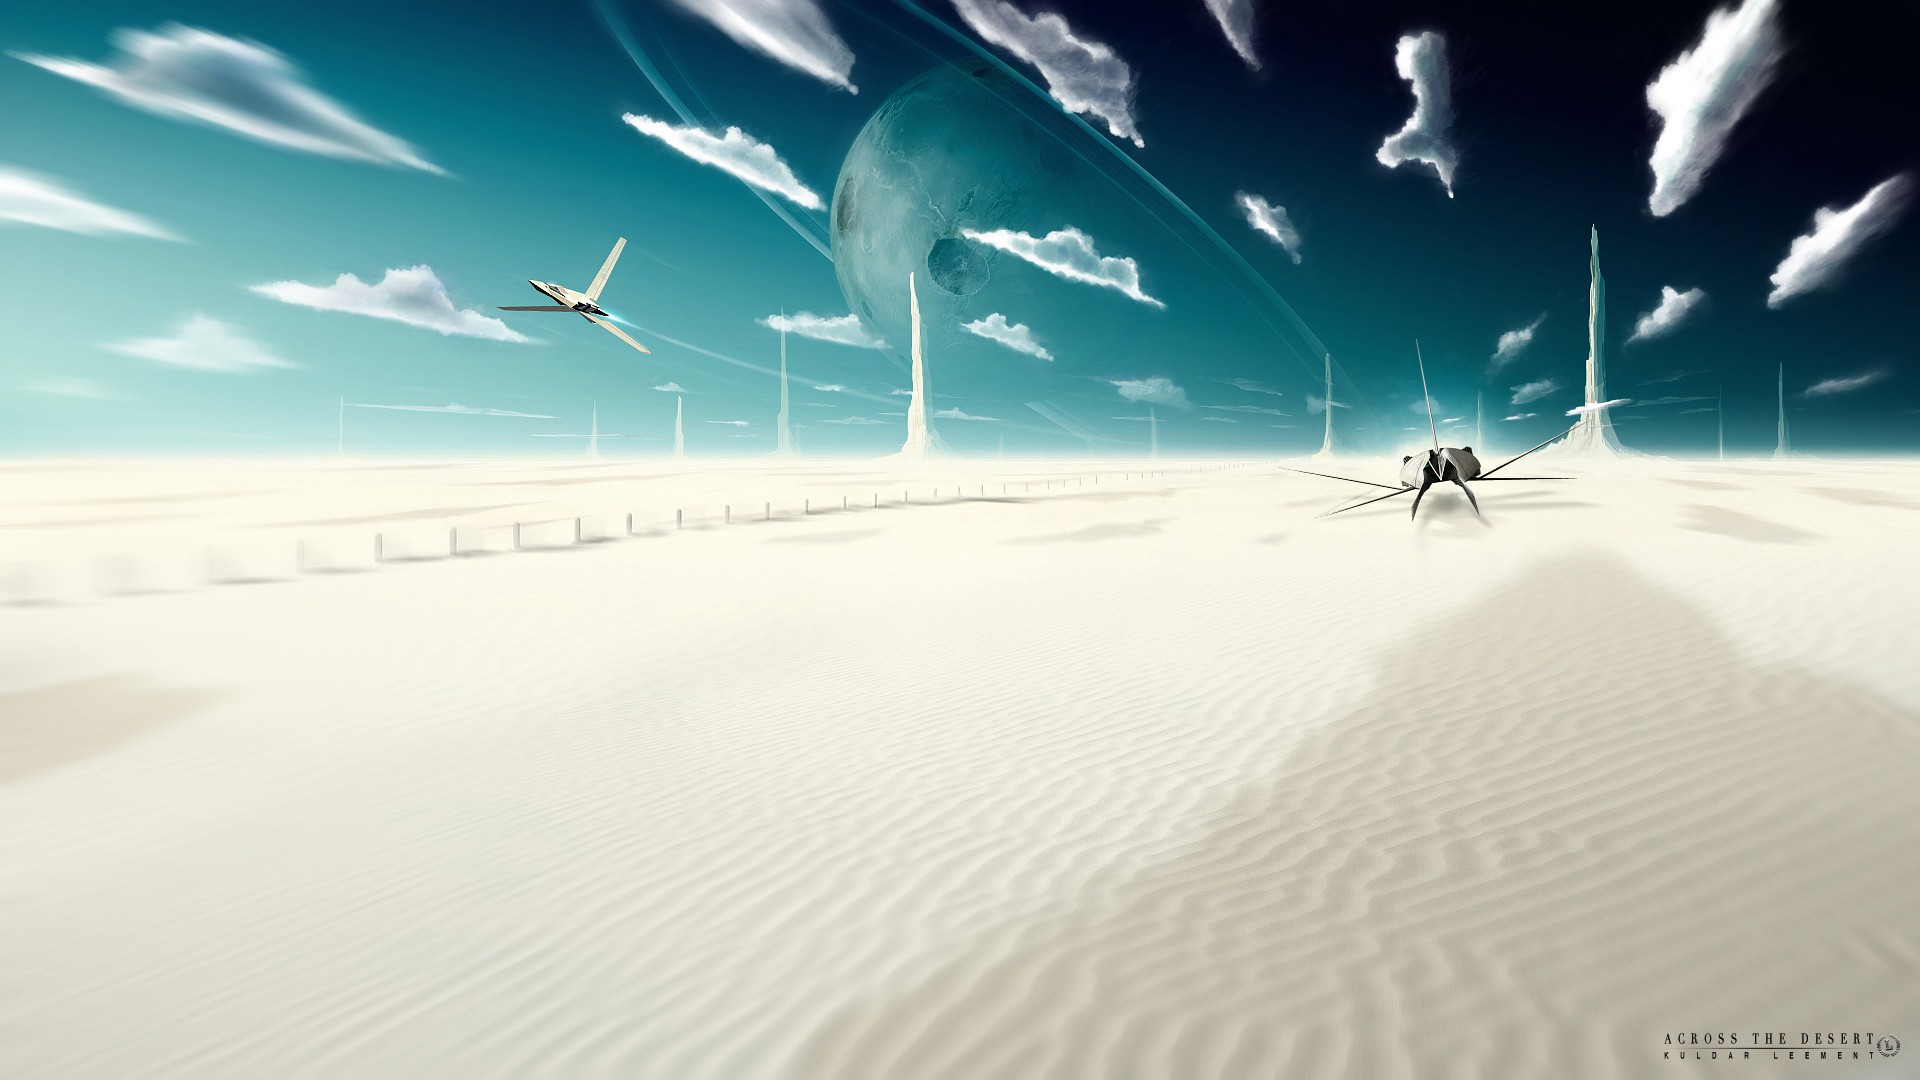 General 1920x1080 CGI digital art artwork landscape vehicle sky desert